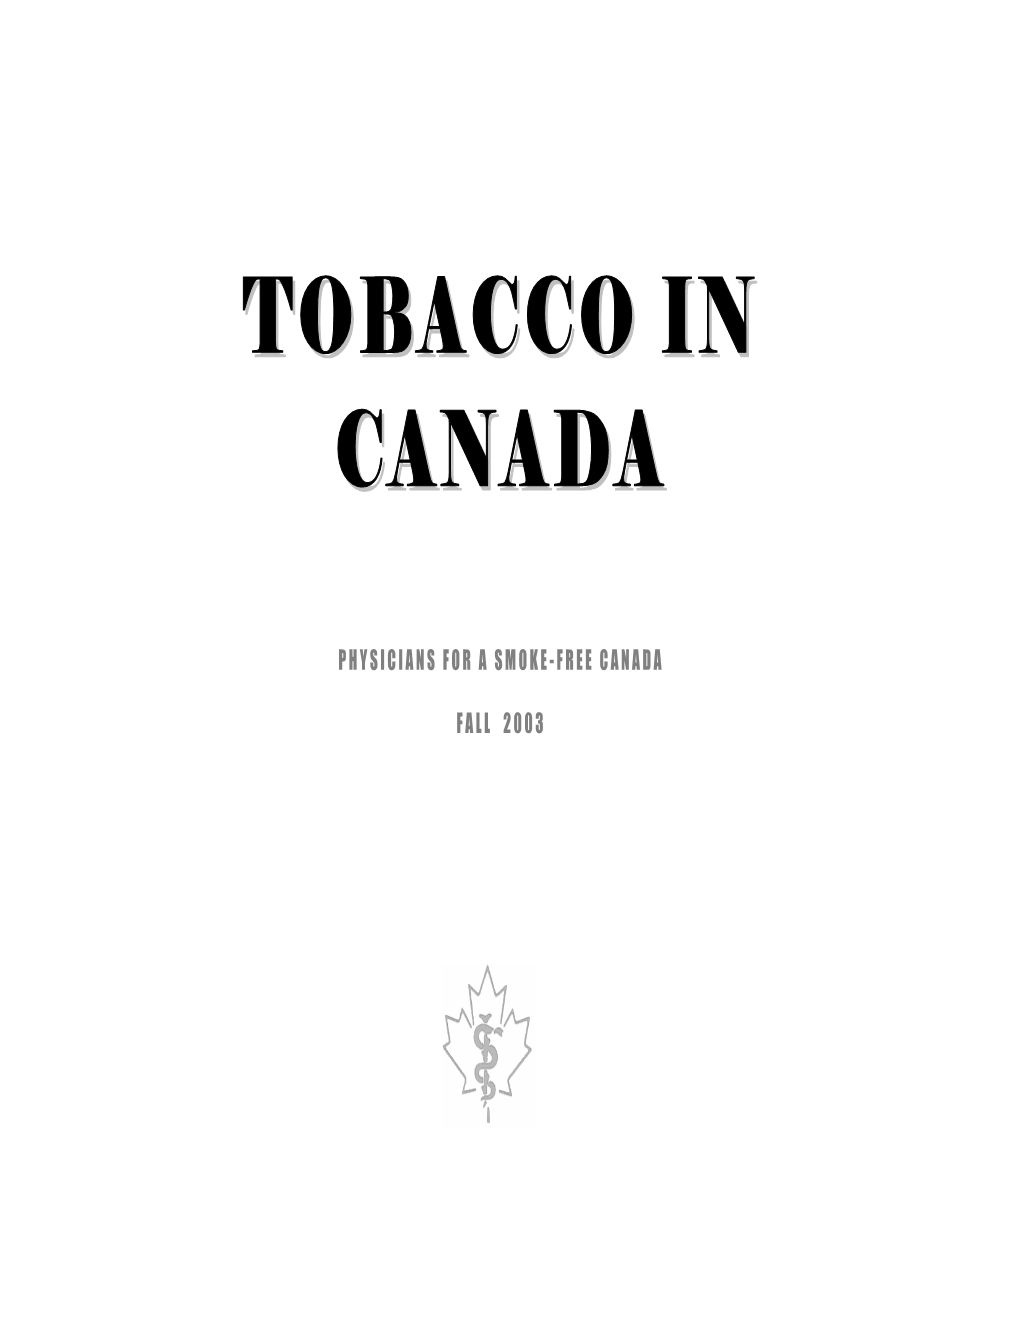 Tobacco in Canada